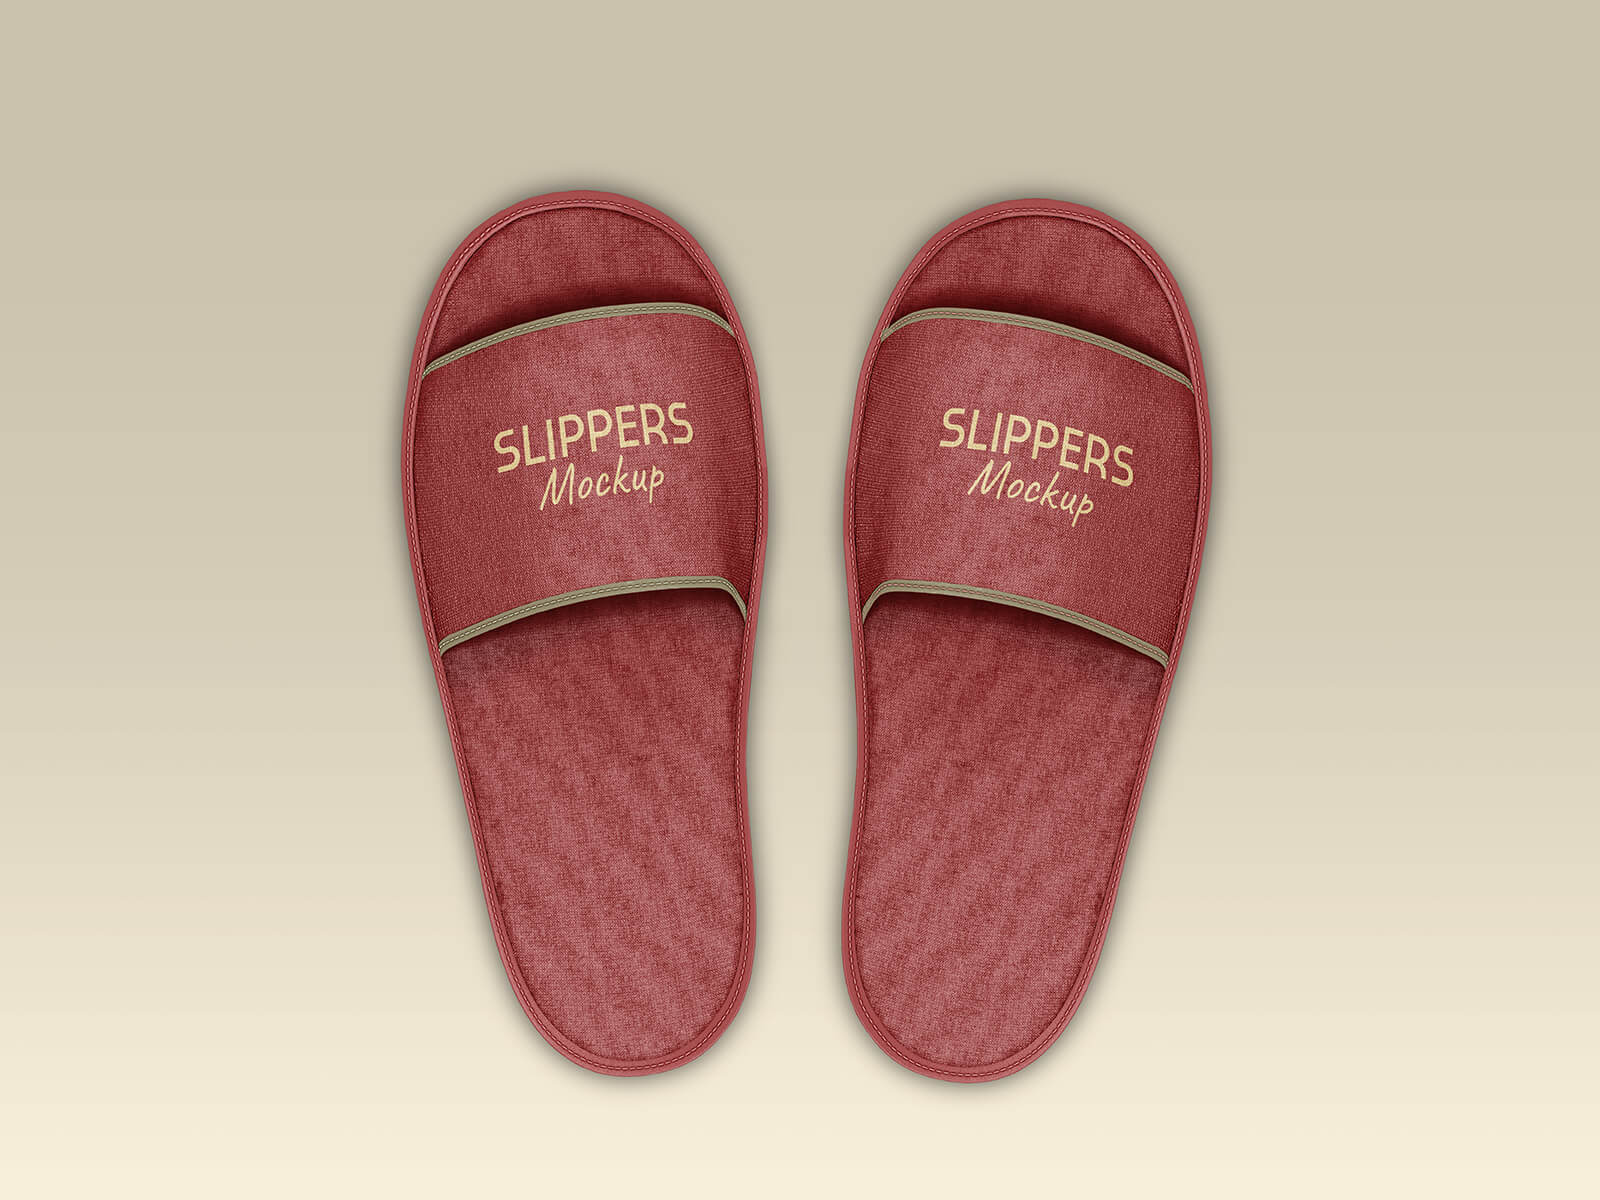 Hotel / Spa Slippers Mockup